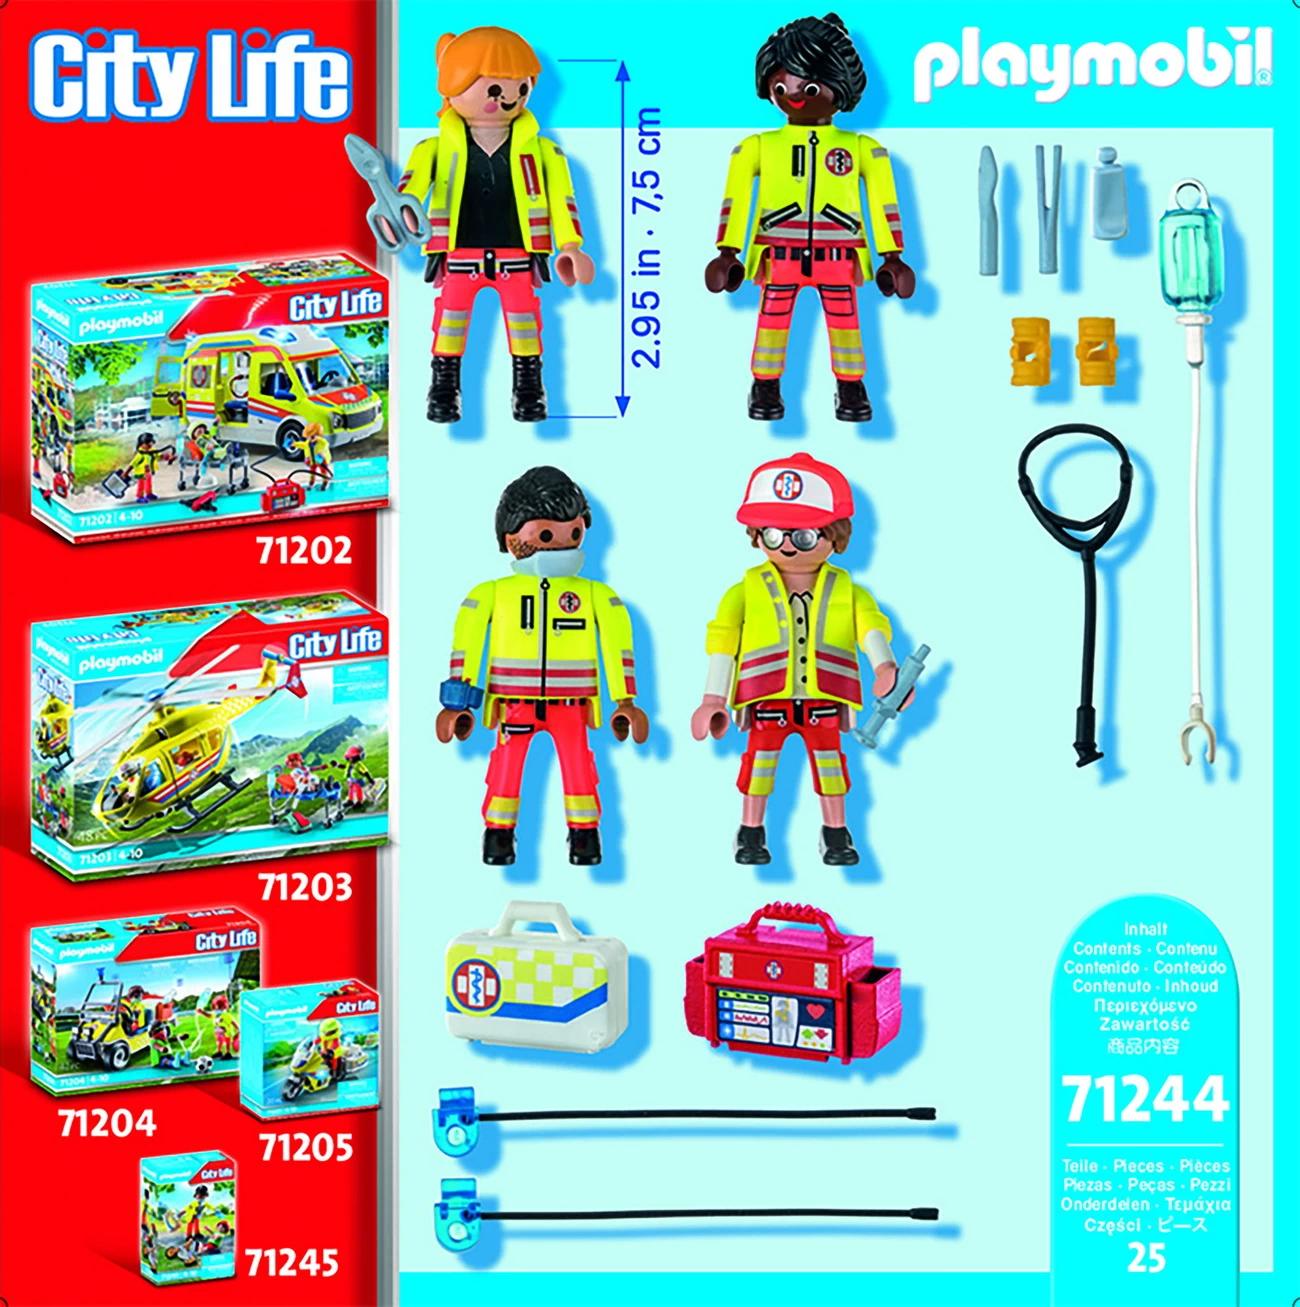 Playmobil 71244 - Rettungsteam - City Life